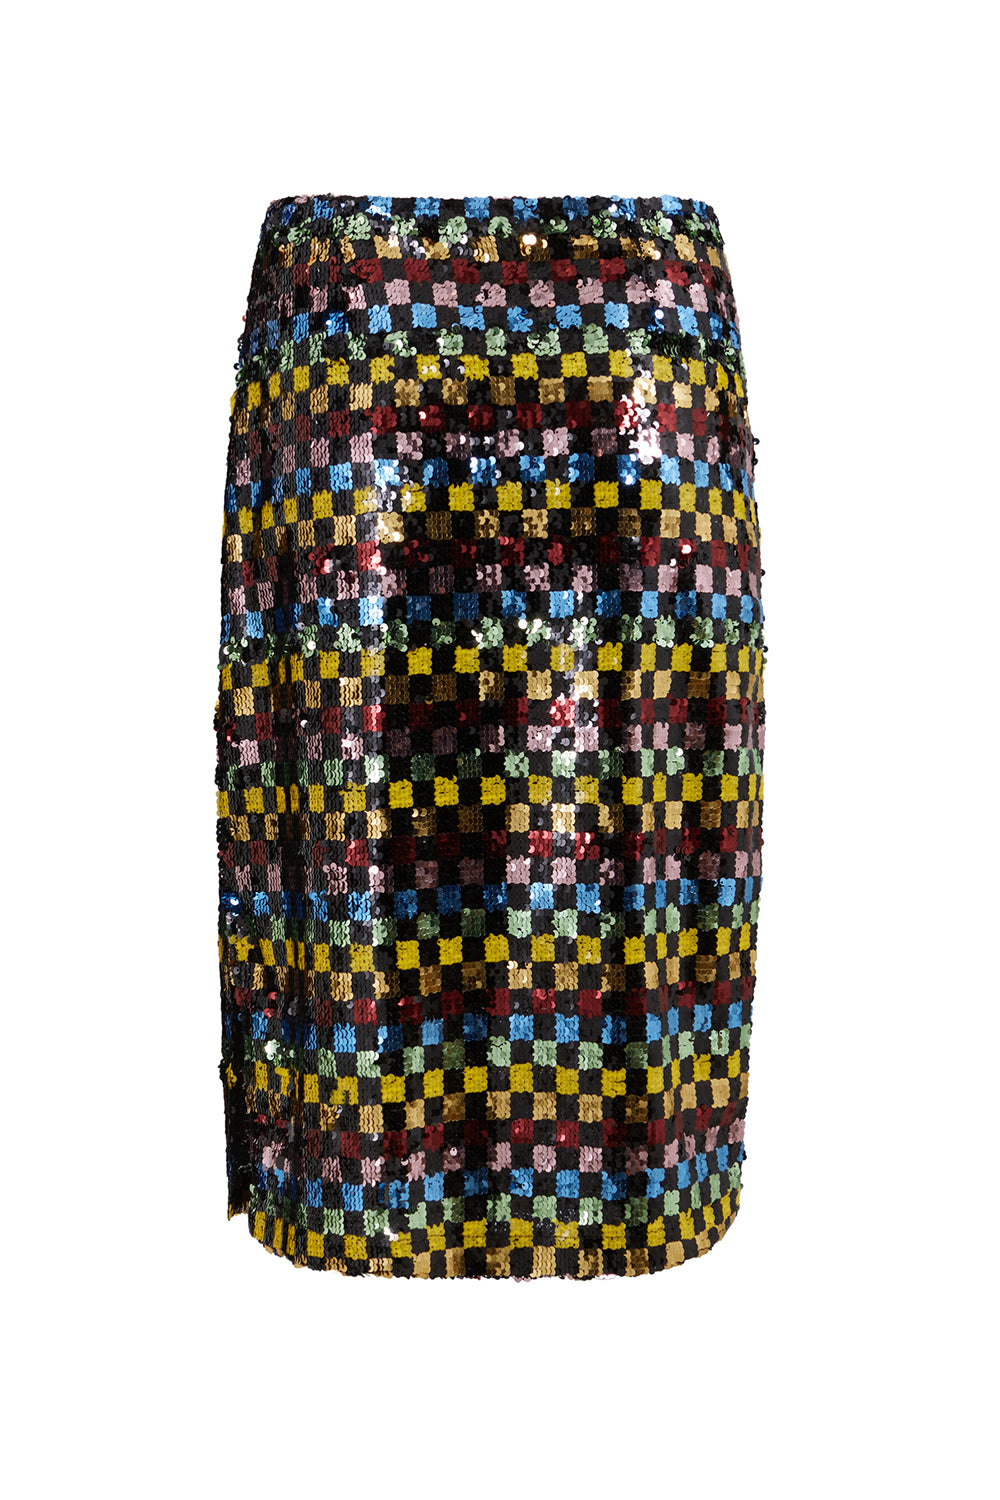 Coster Copenhagen Skirt W Printed Sequins Multi